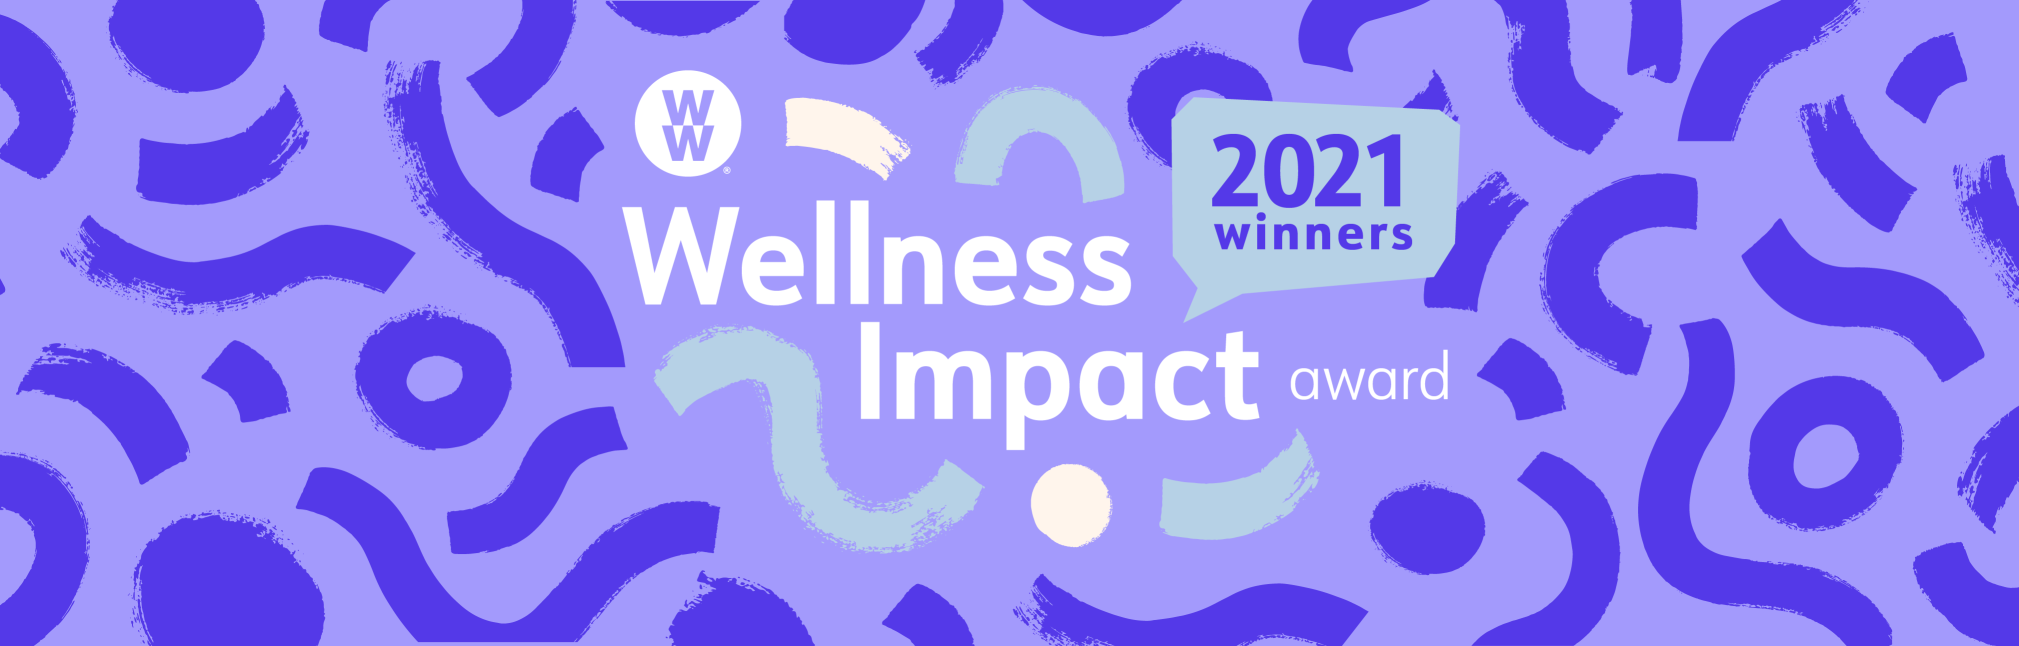 Weight Watchers Wellness Impact Award 2021 Winners